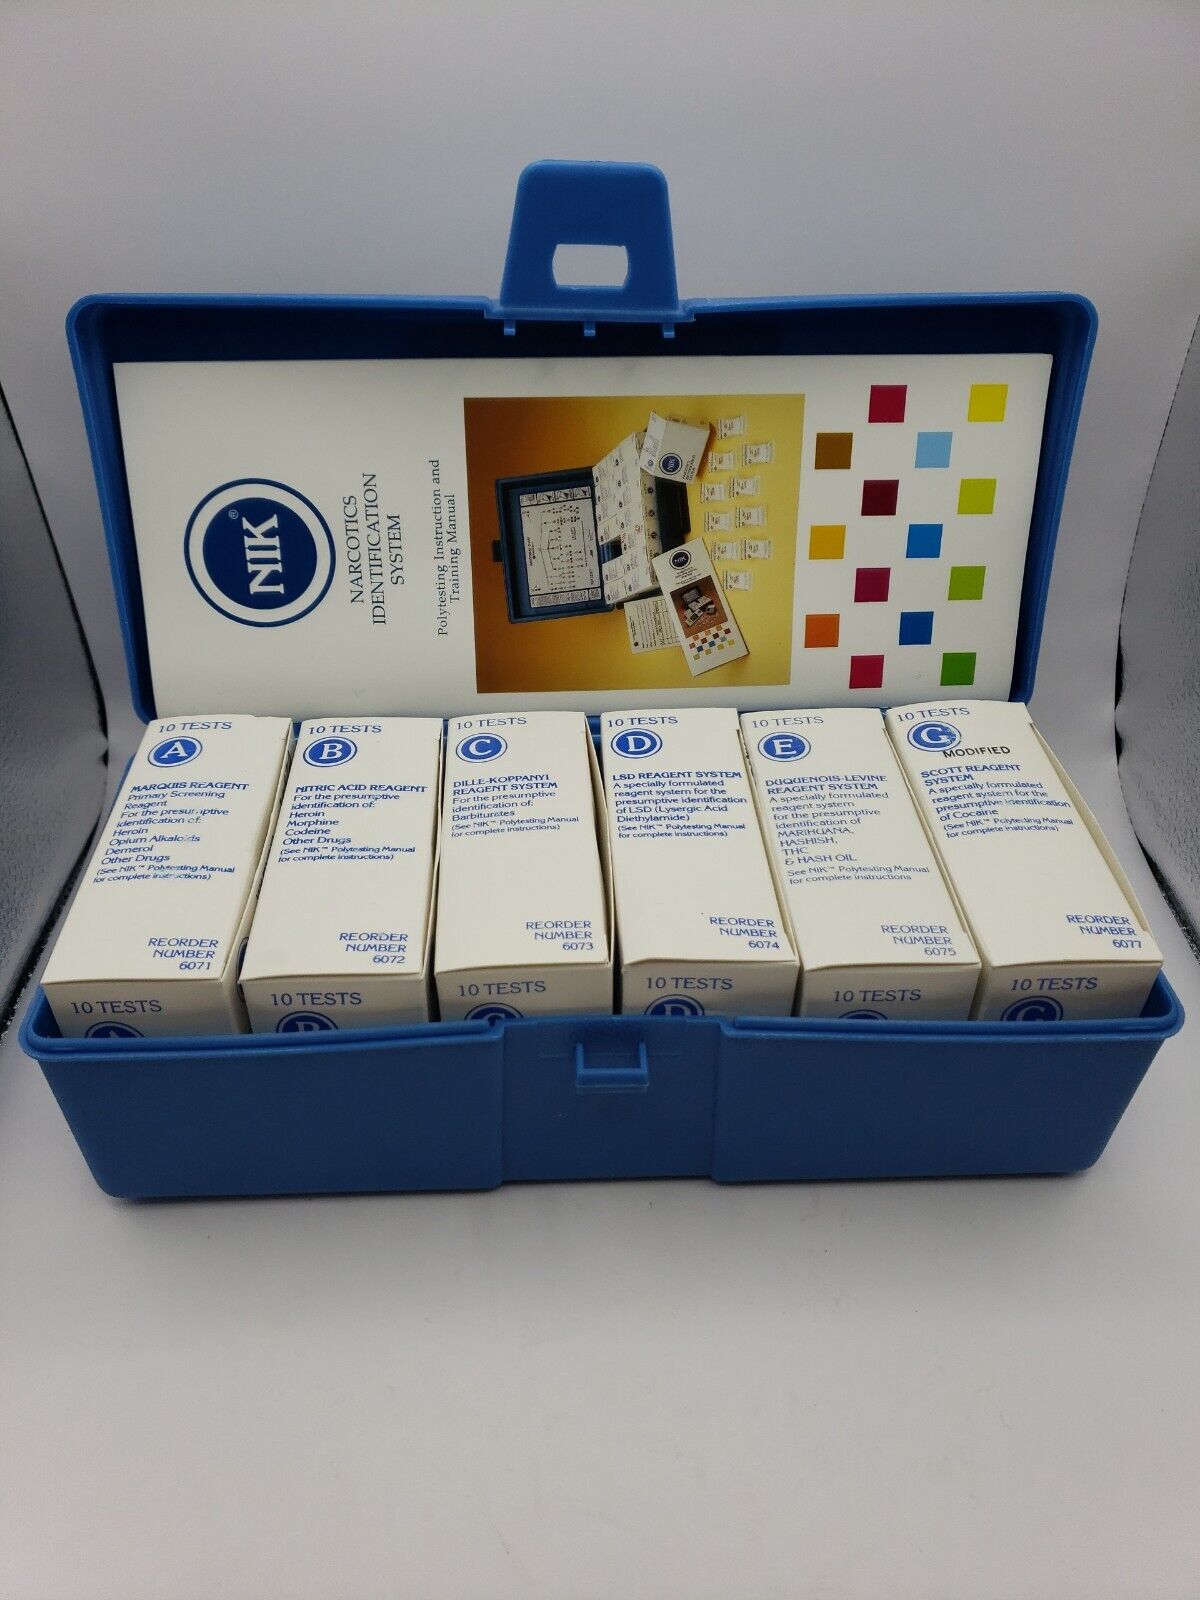 Vtg 1987? NIK 6060 Narcotics Identification System NarcoPouch + Manuals